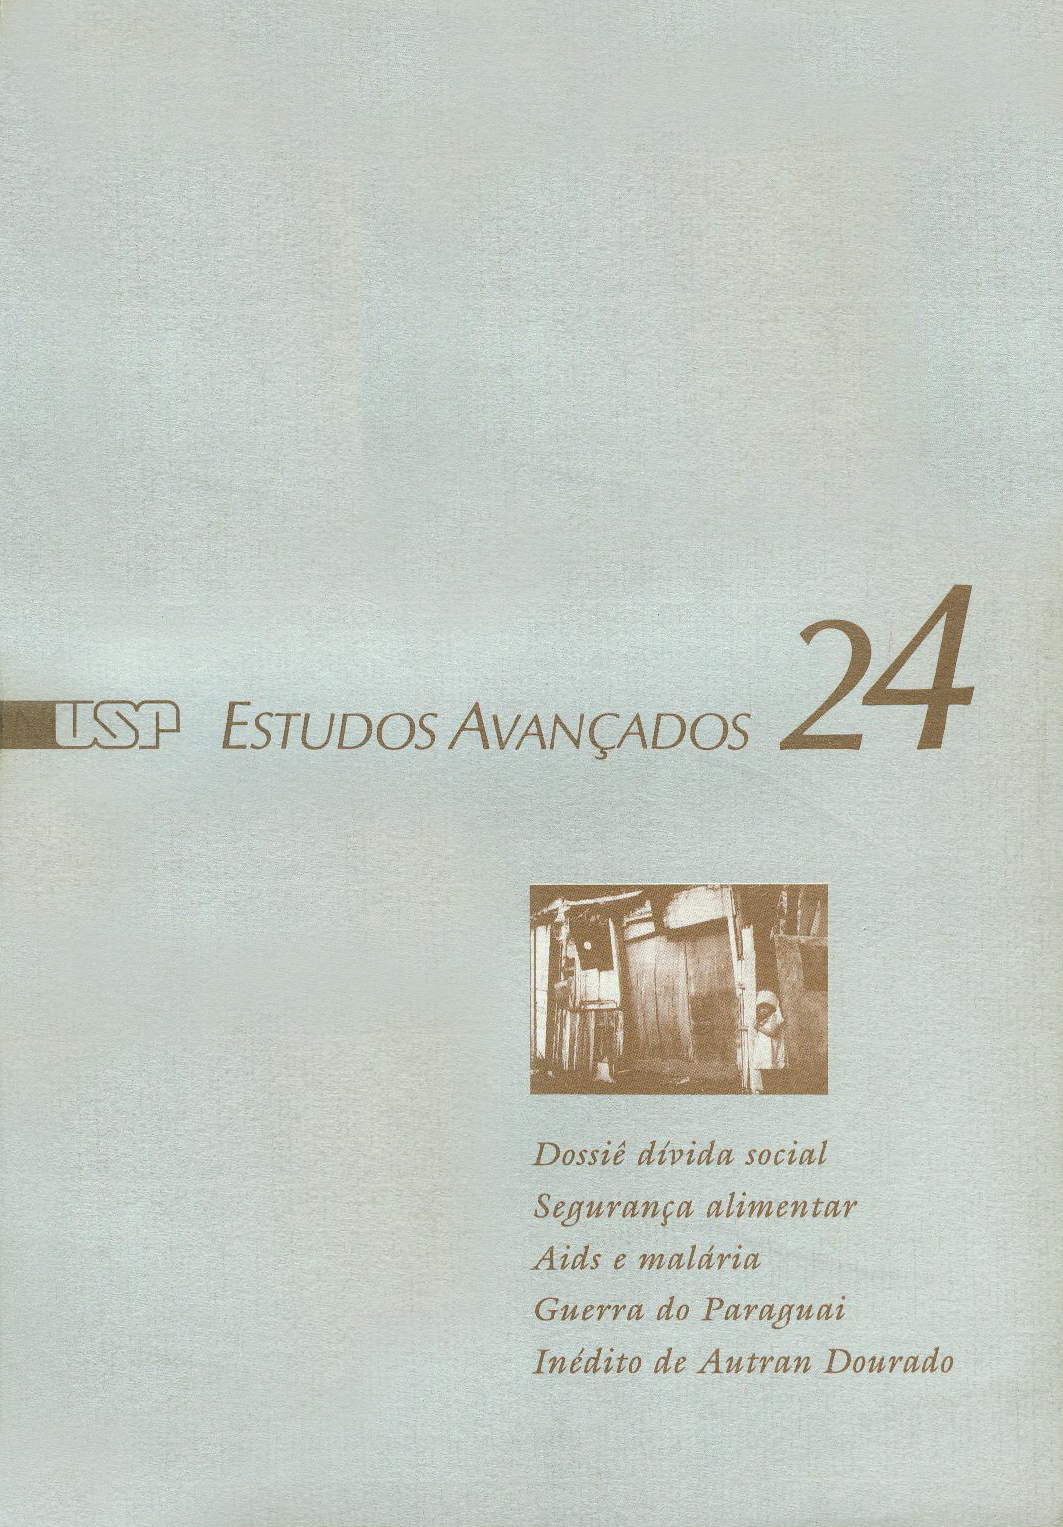 					View Vol. 9 No. 24 (1995)
				